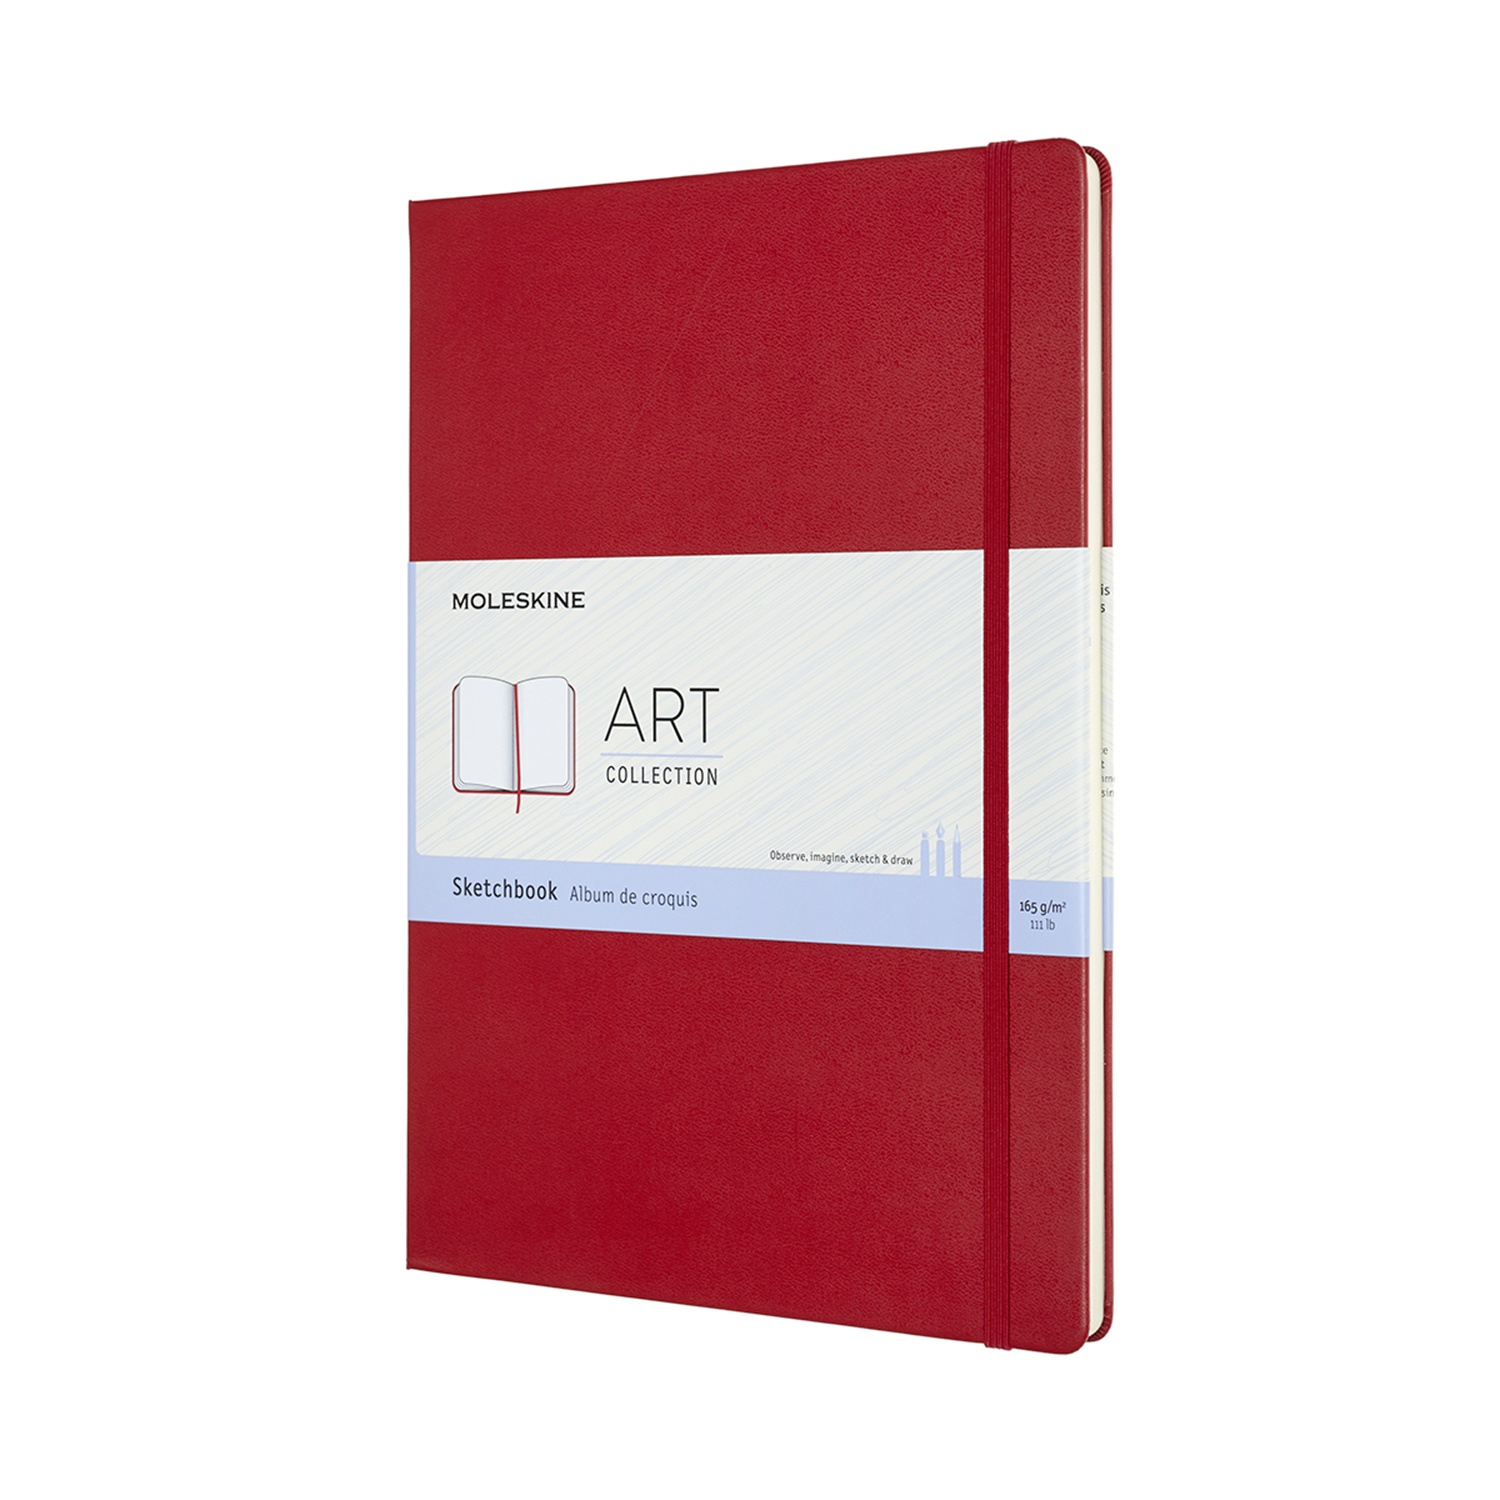 Скетчбук для рисования ART SKETCHBOOK 120г/кв.м (А4) 210х297мм 52л. красный по 2 869.00 руб от Moleskine